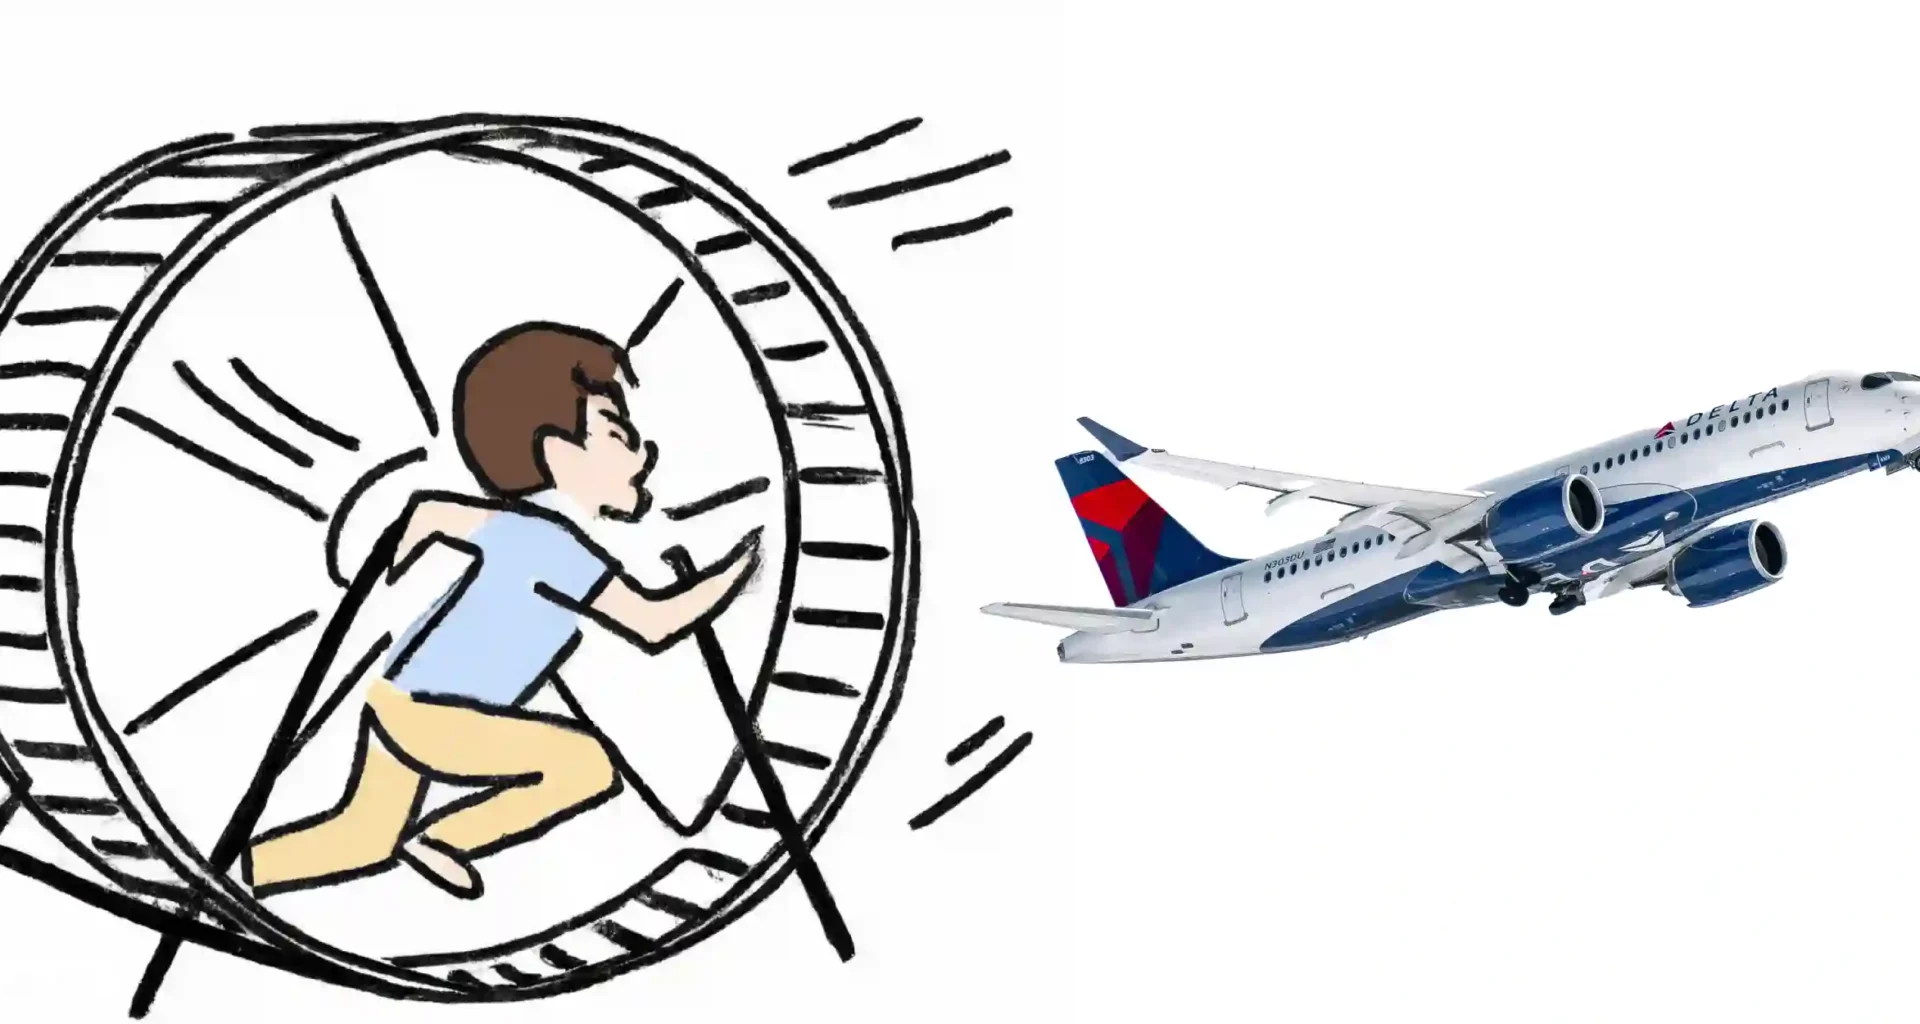 Man in hamster wheel running after Delta airplane